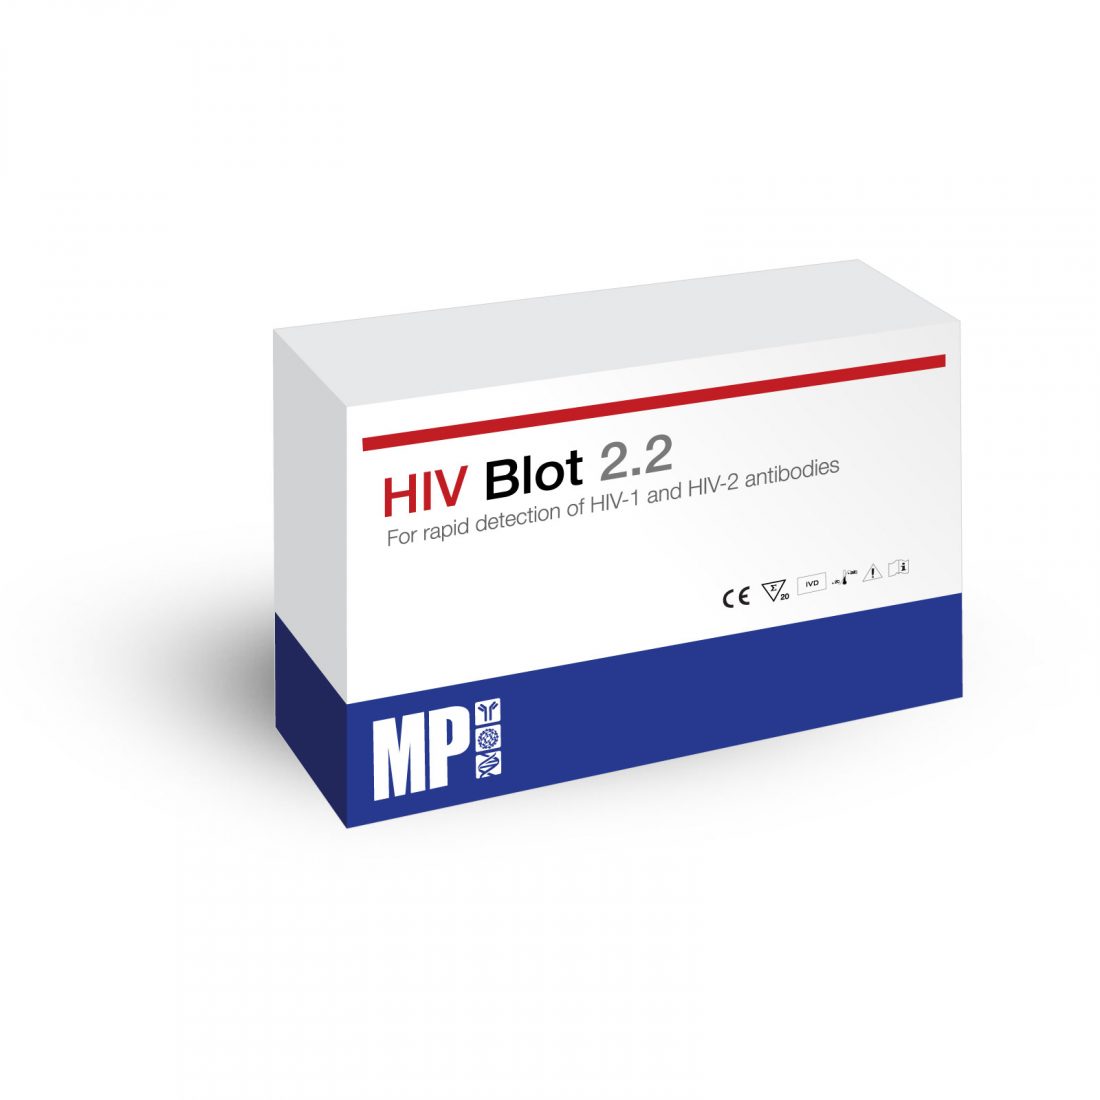 western blot hiv example